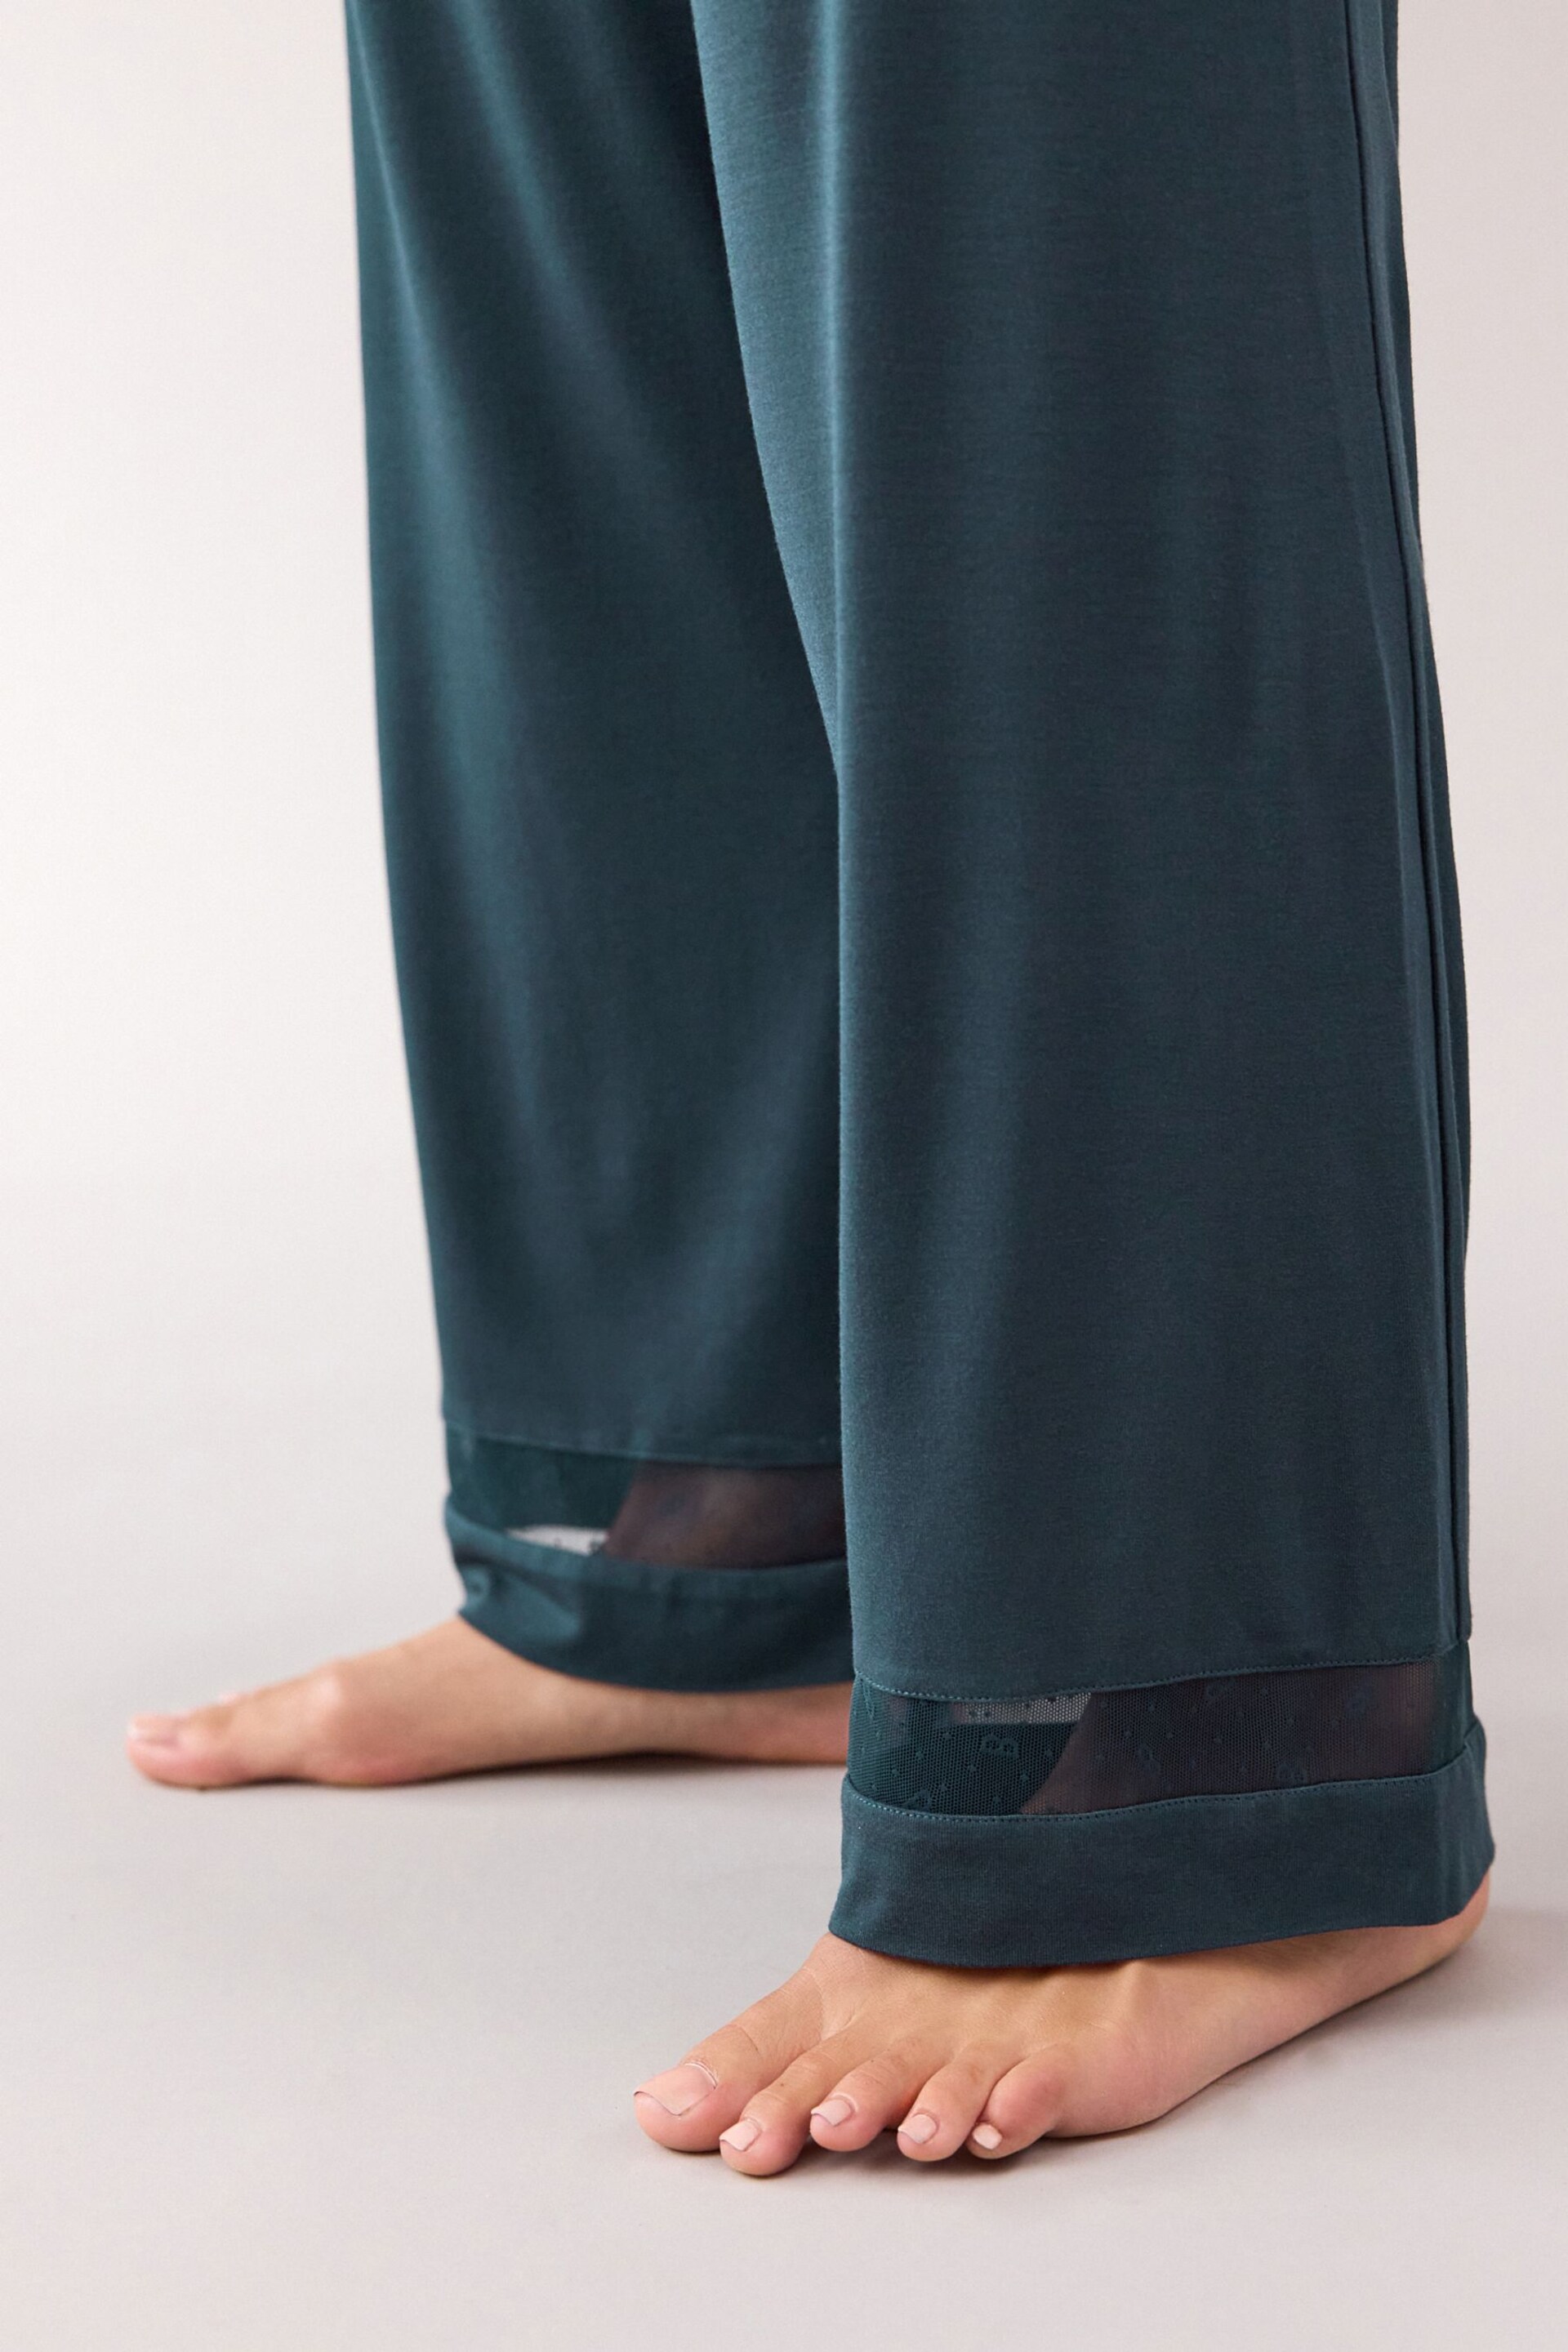 B by Ted Baker Modal Pyjama Set - Image 8 of 11